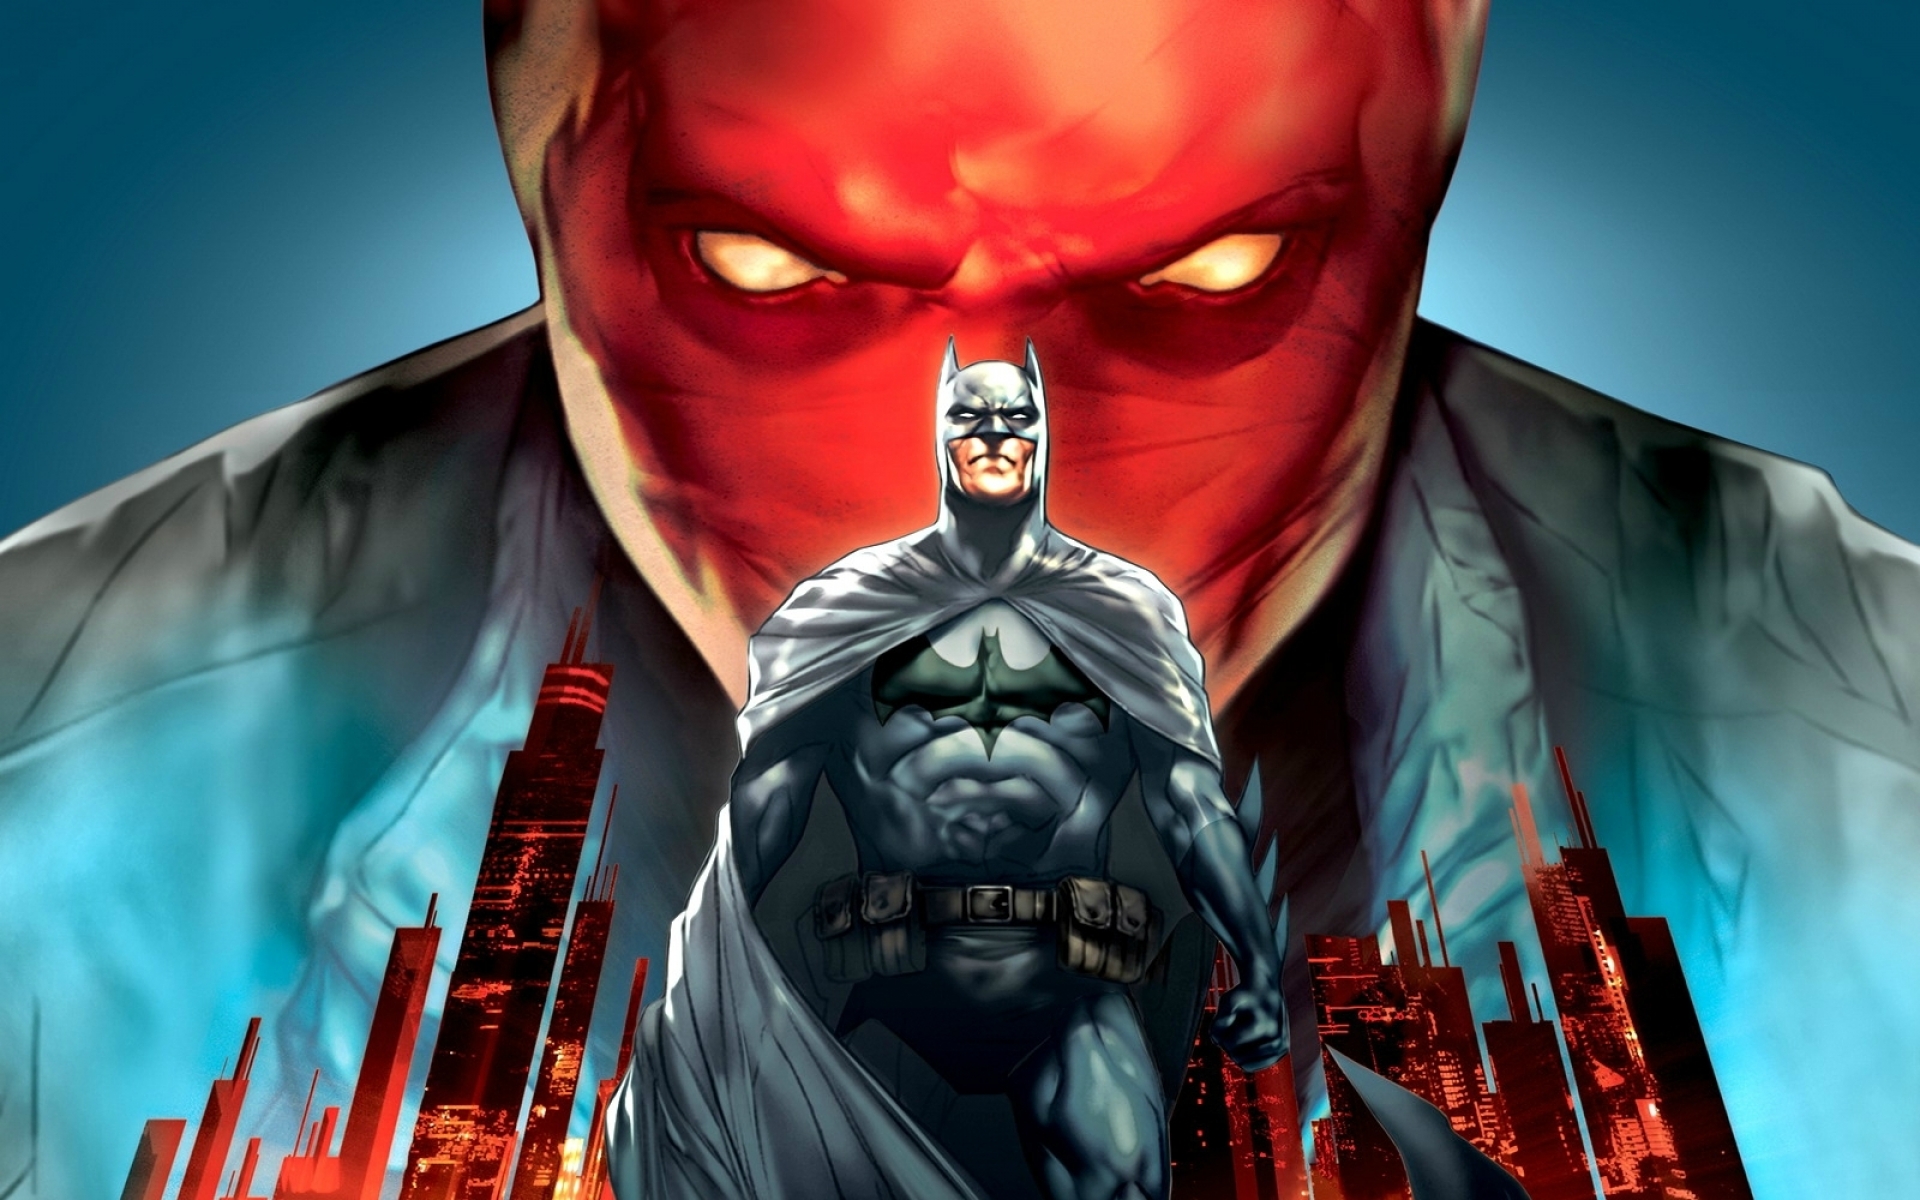 Fictional character,Superhero,Supervillain,Batman,Cg artwork,Illustration,Demon,Movie